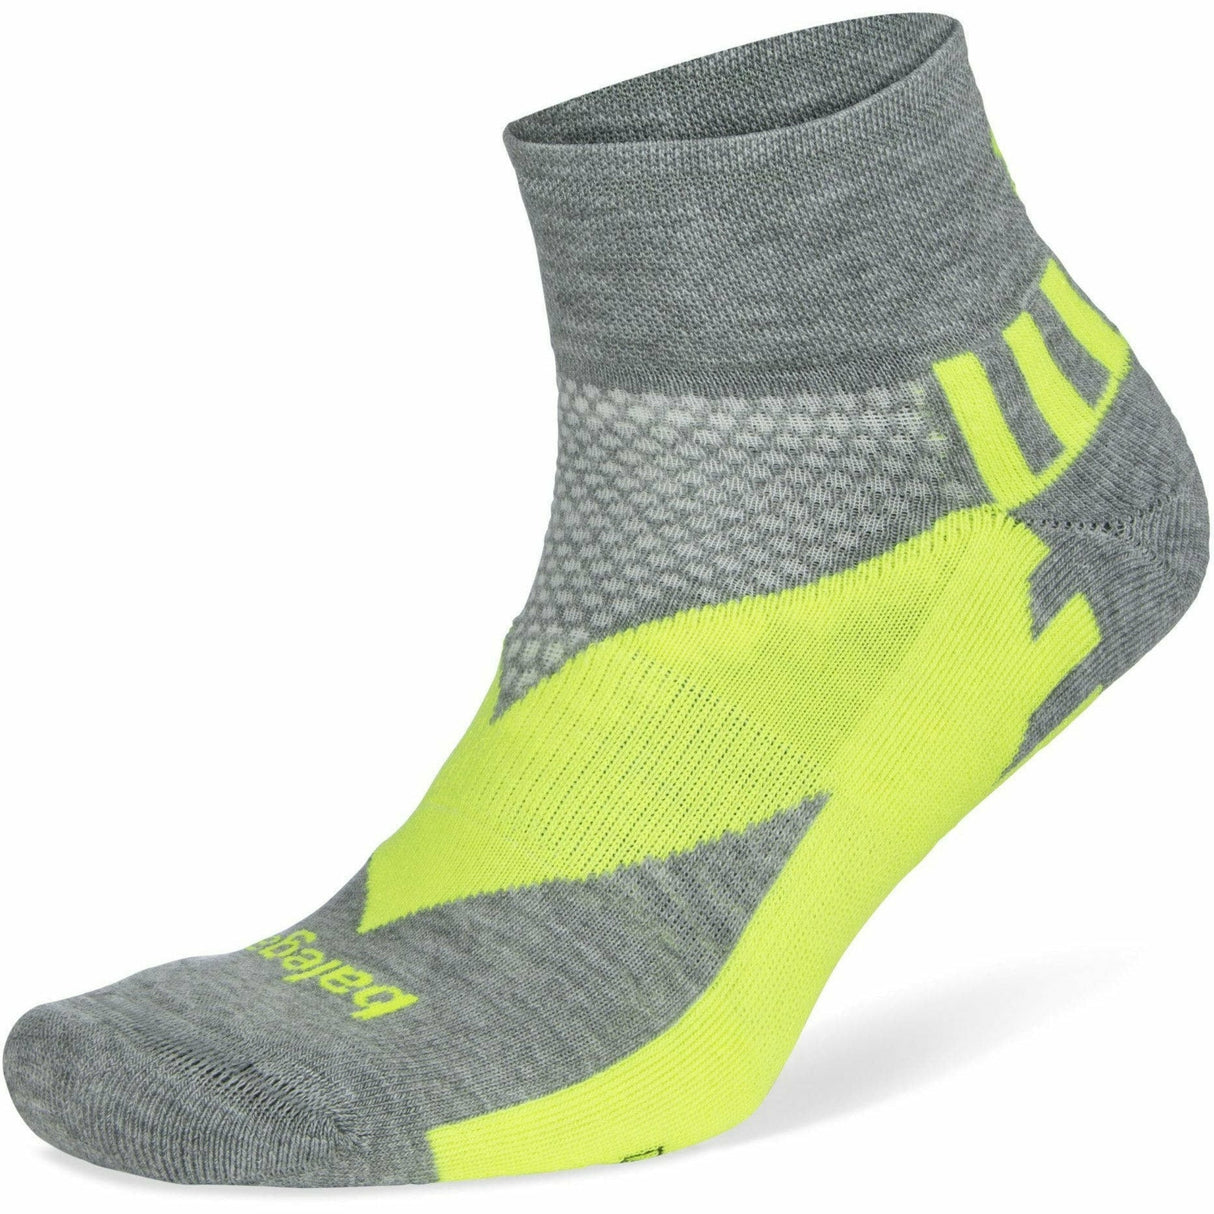 Balega Enduro Reflective Quarter Socks  -  Small / Midgray/Neon Lime